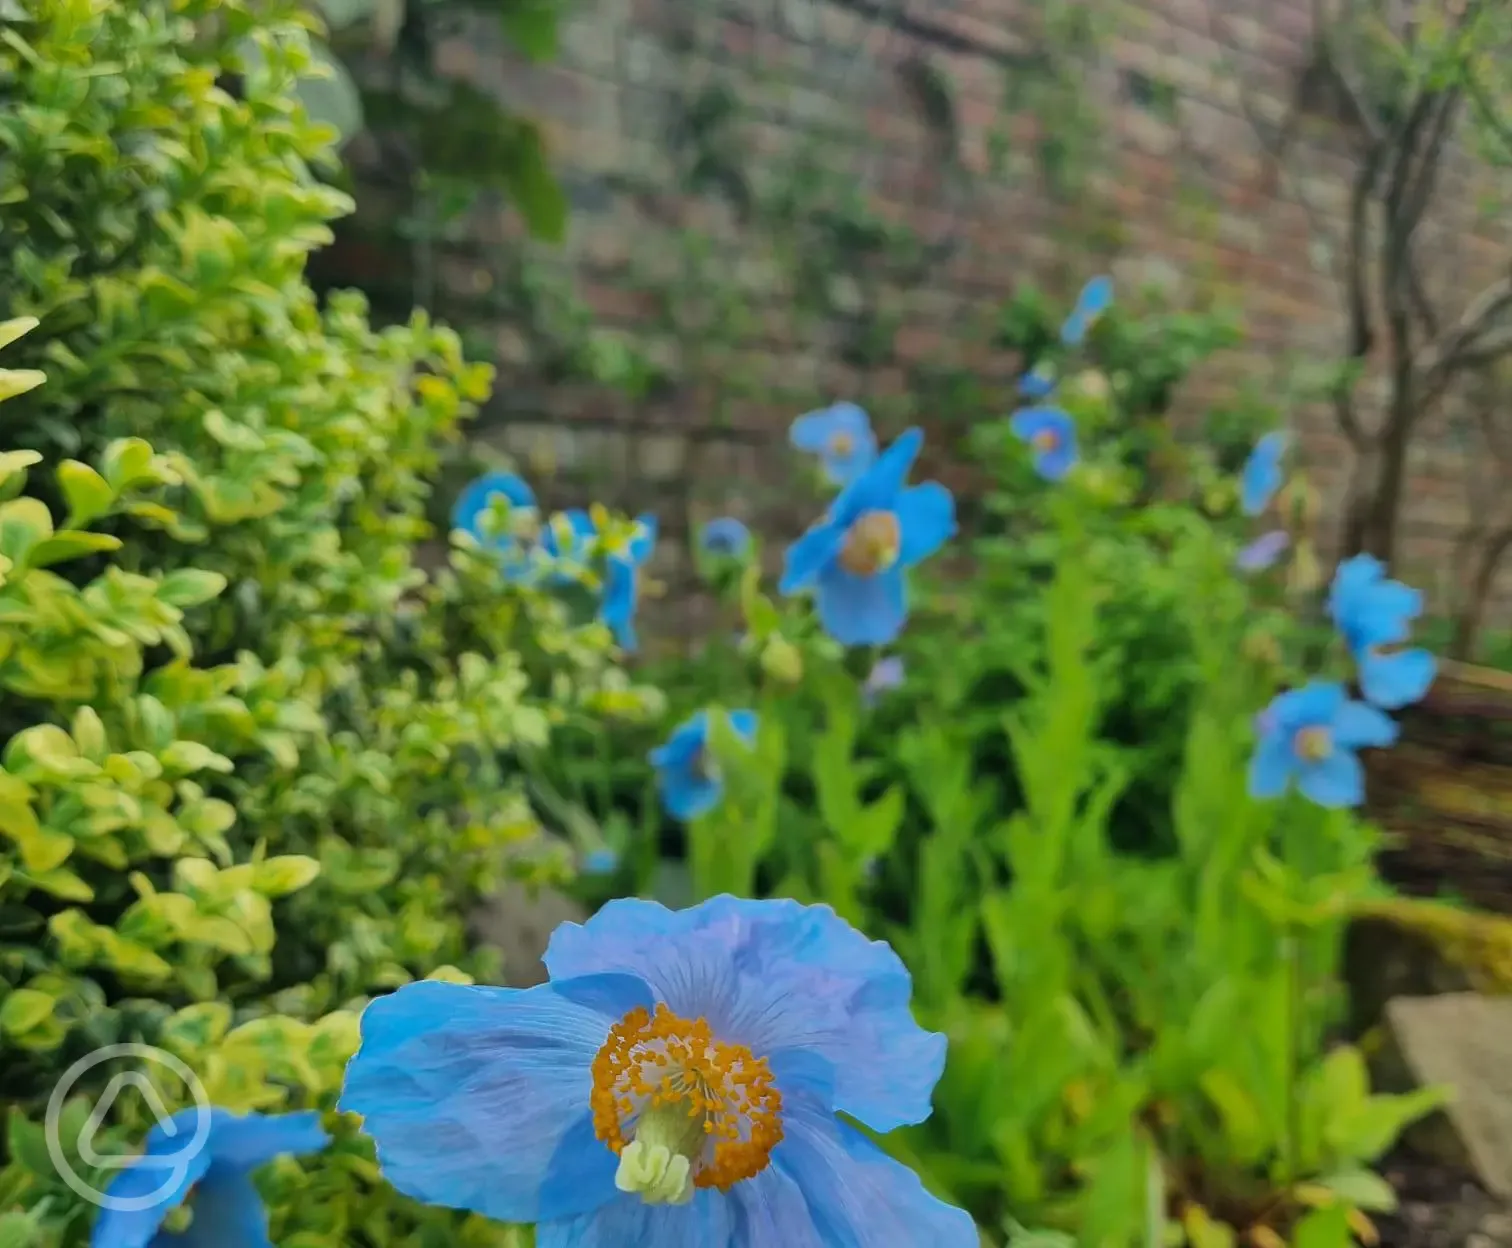 Our little Himalayan Blue Poppy garden